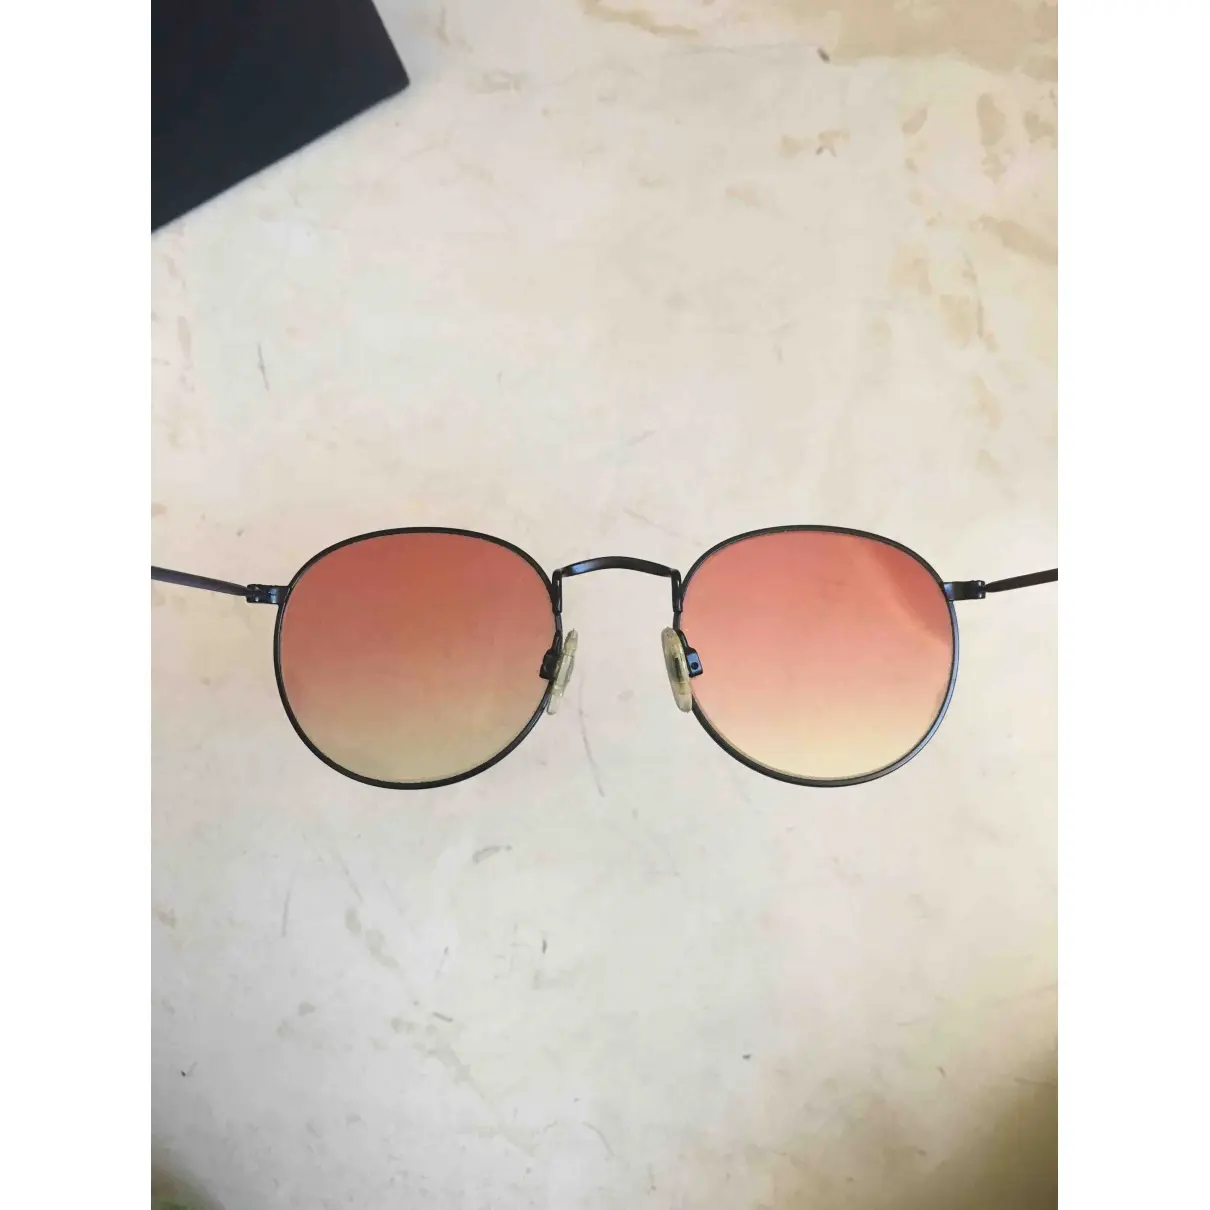 Buy Carolina Lemke Sunglasses online